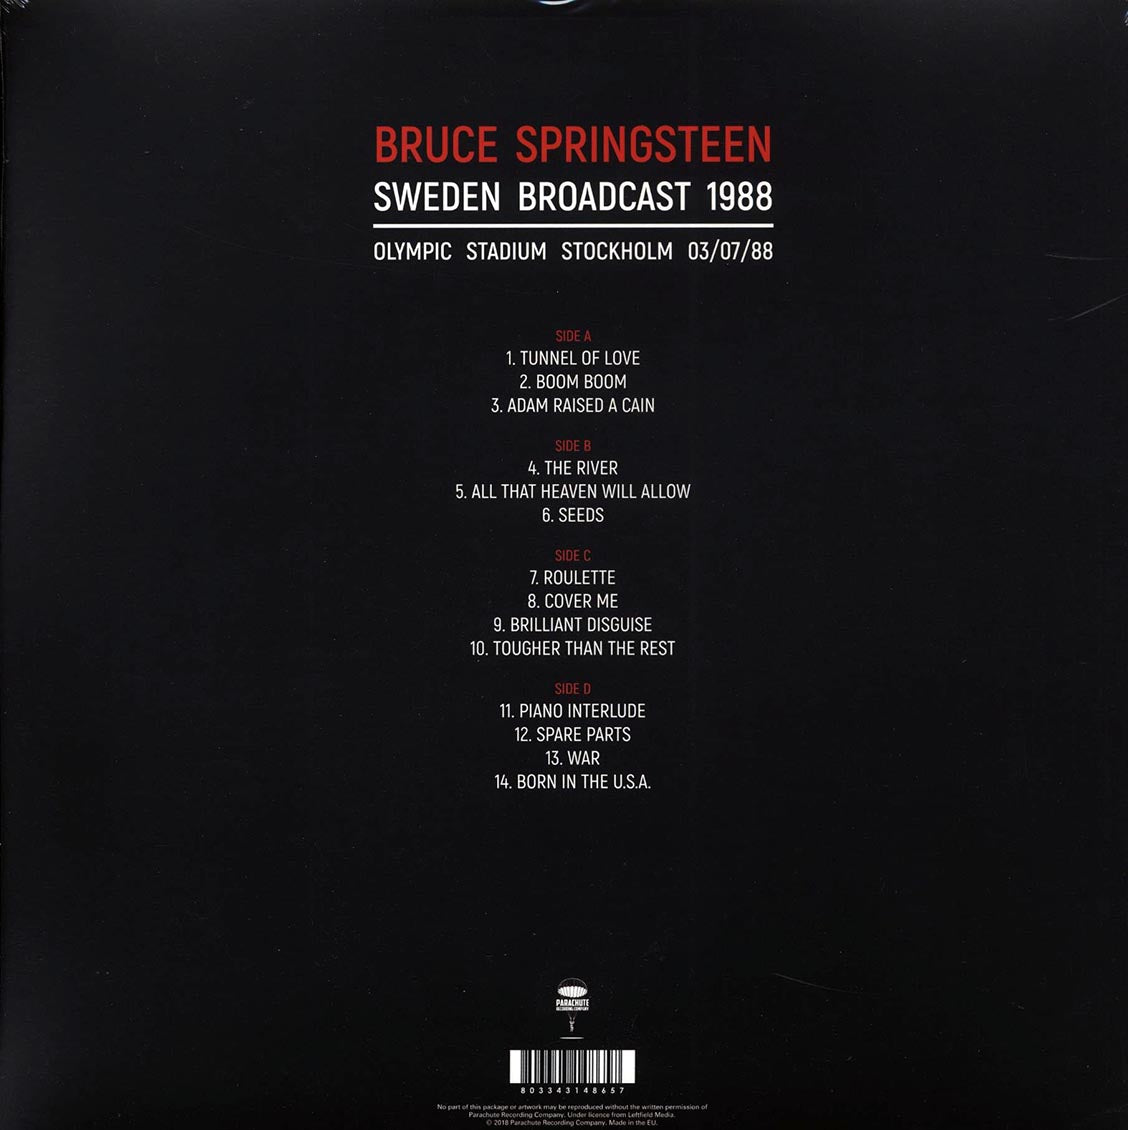 Bruce Springsteen - Sweden Broadcast 1988: Olympic Stadium Stockholm 03/07/88 (ltd. ed.) (2xLP) (white vinyl) - Vinyl LP, LP